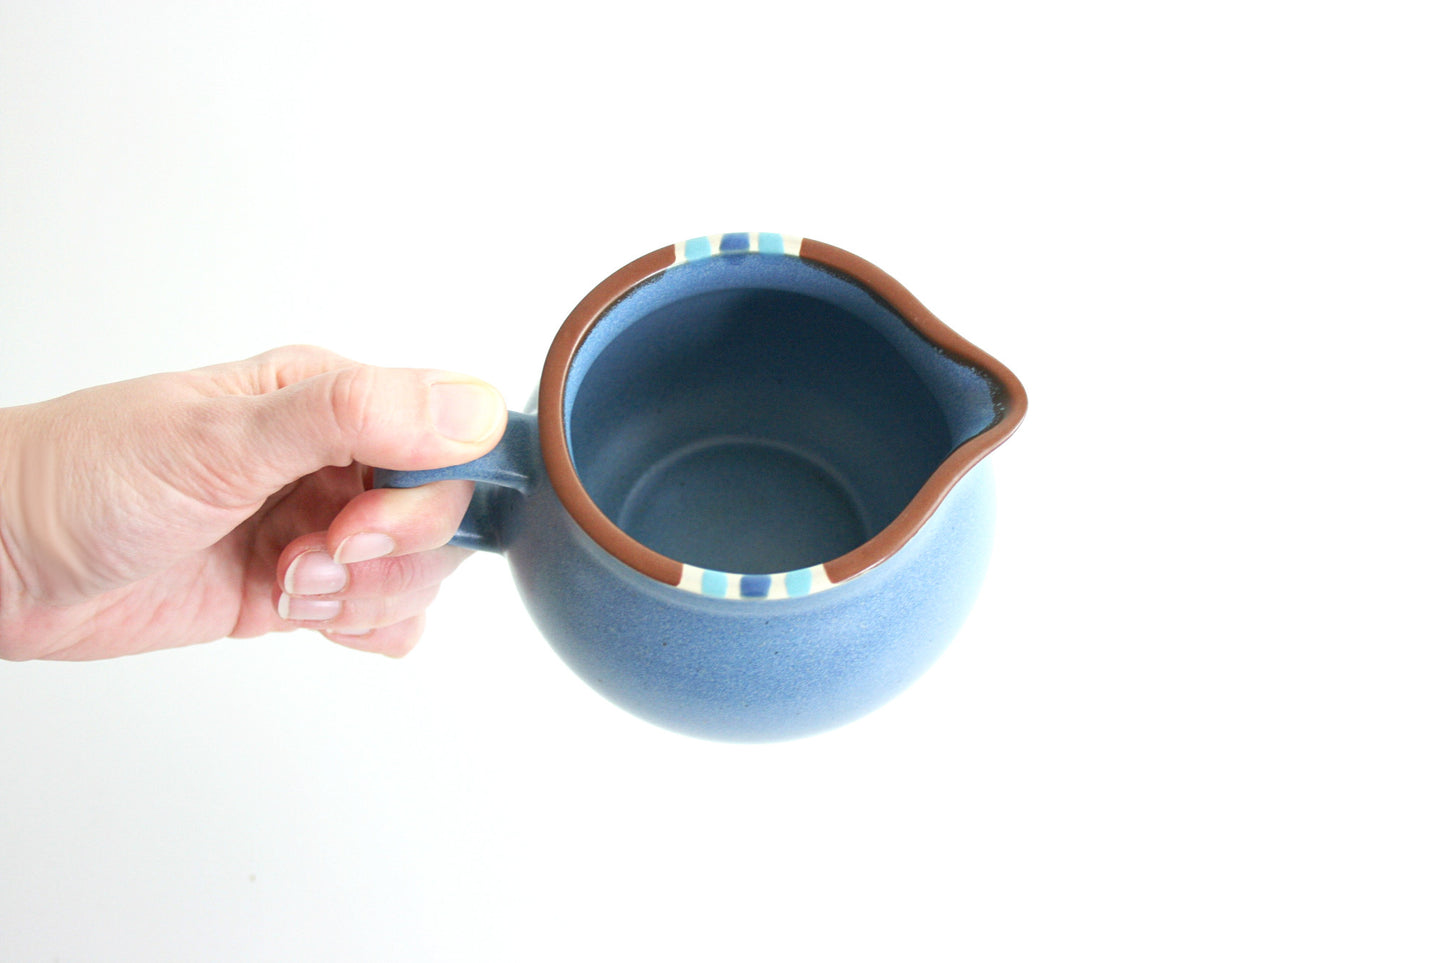 SOLD - Vintage Dansk Mesa Blue Stoneware Cream Pitcher